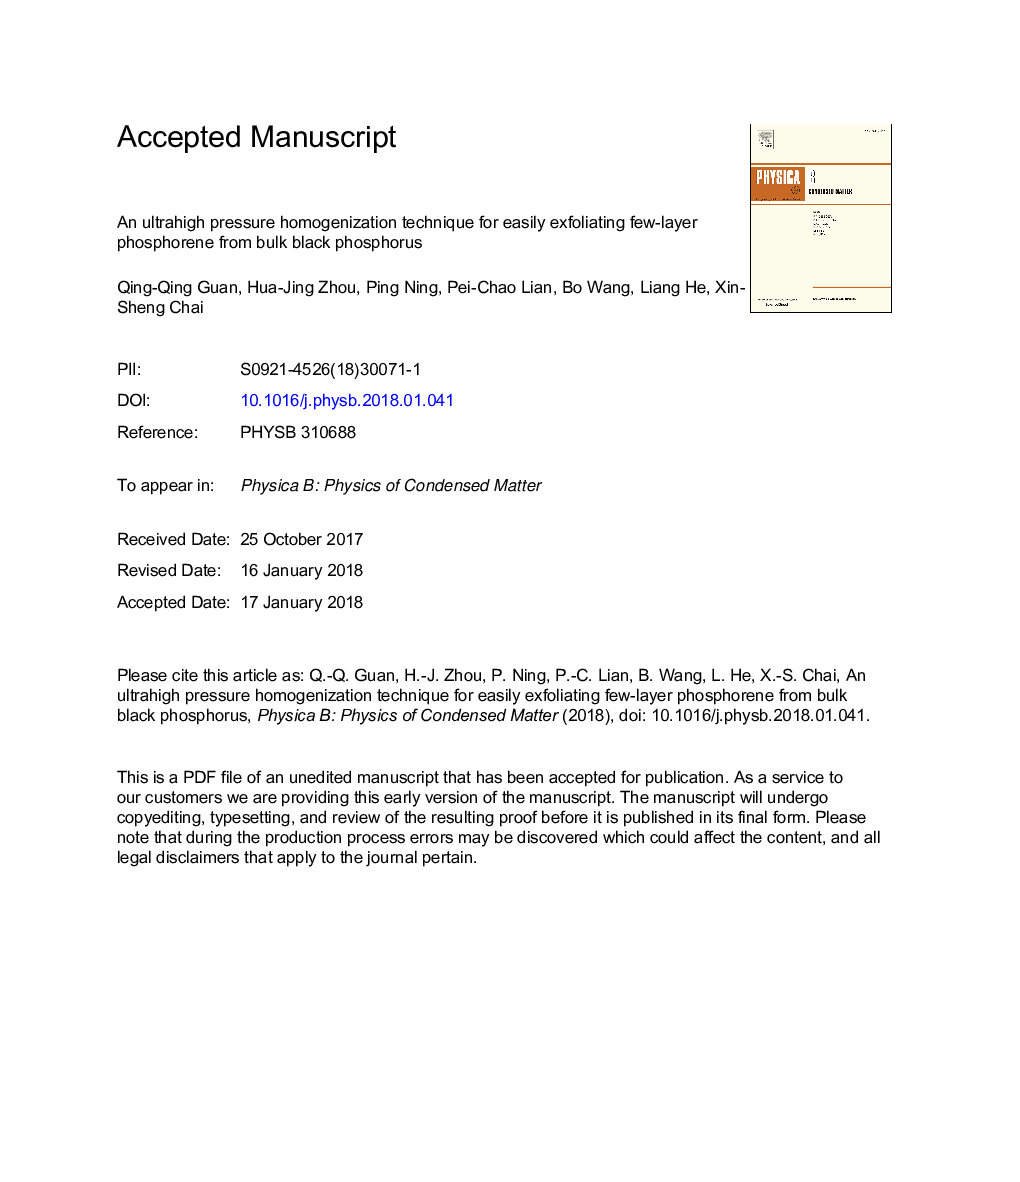 An ultrahigh pressure homogenization technique for easily exfoliating few-layer phosphorene from bulk black phosphorus